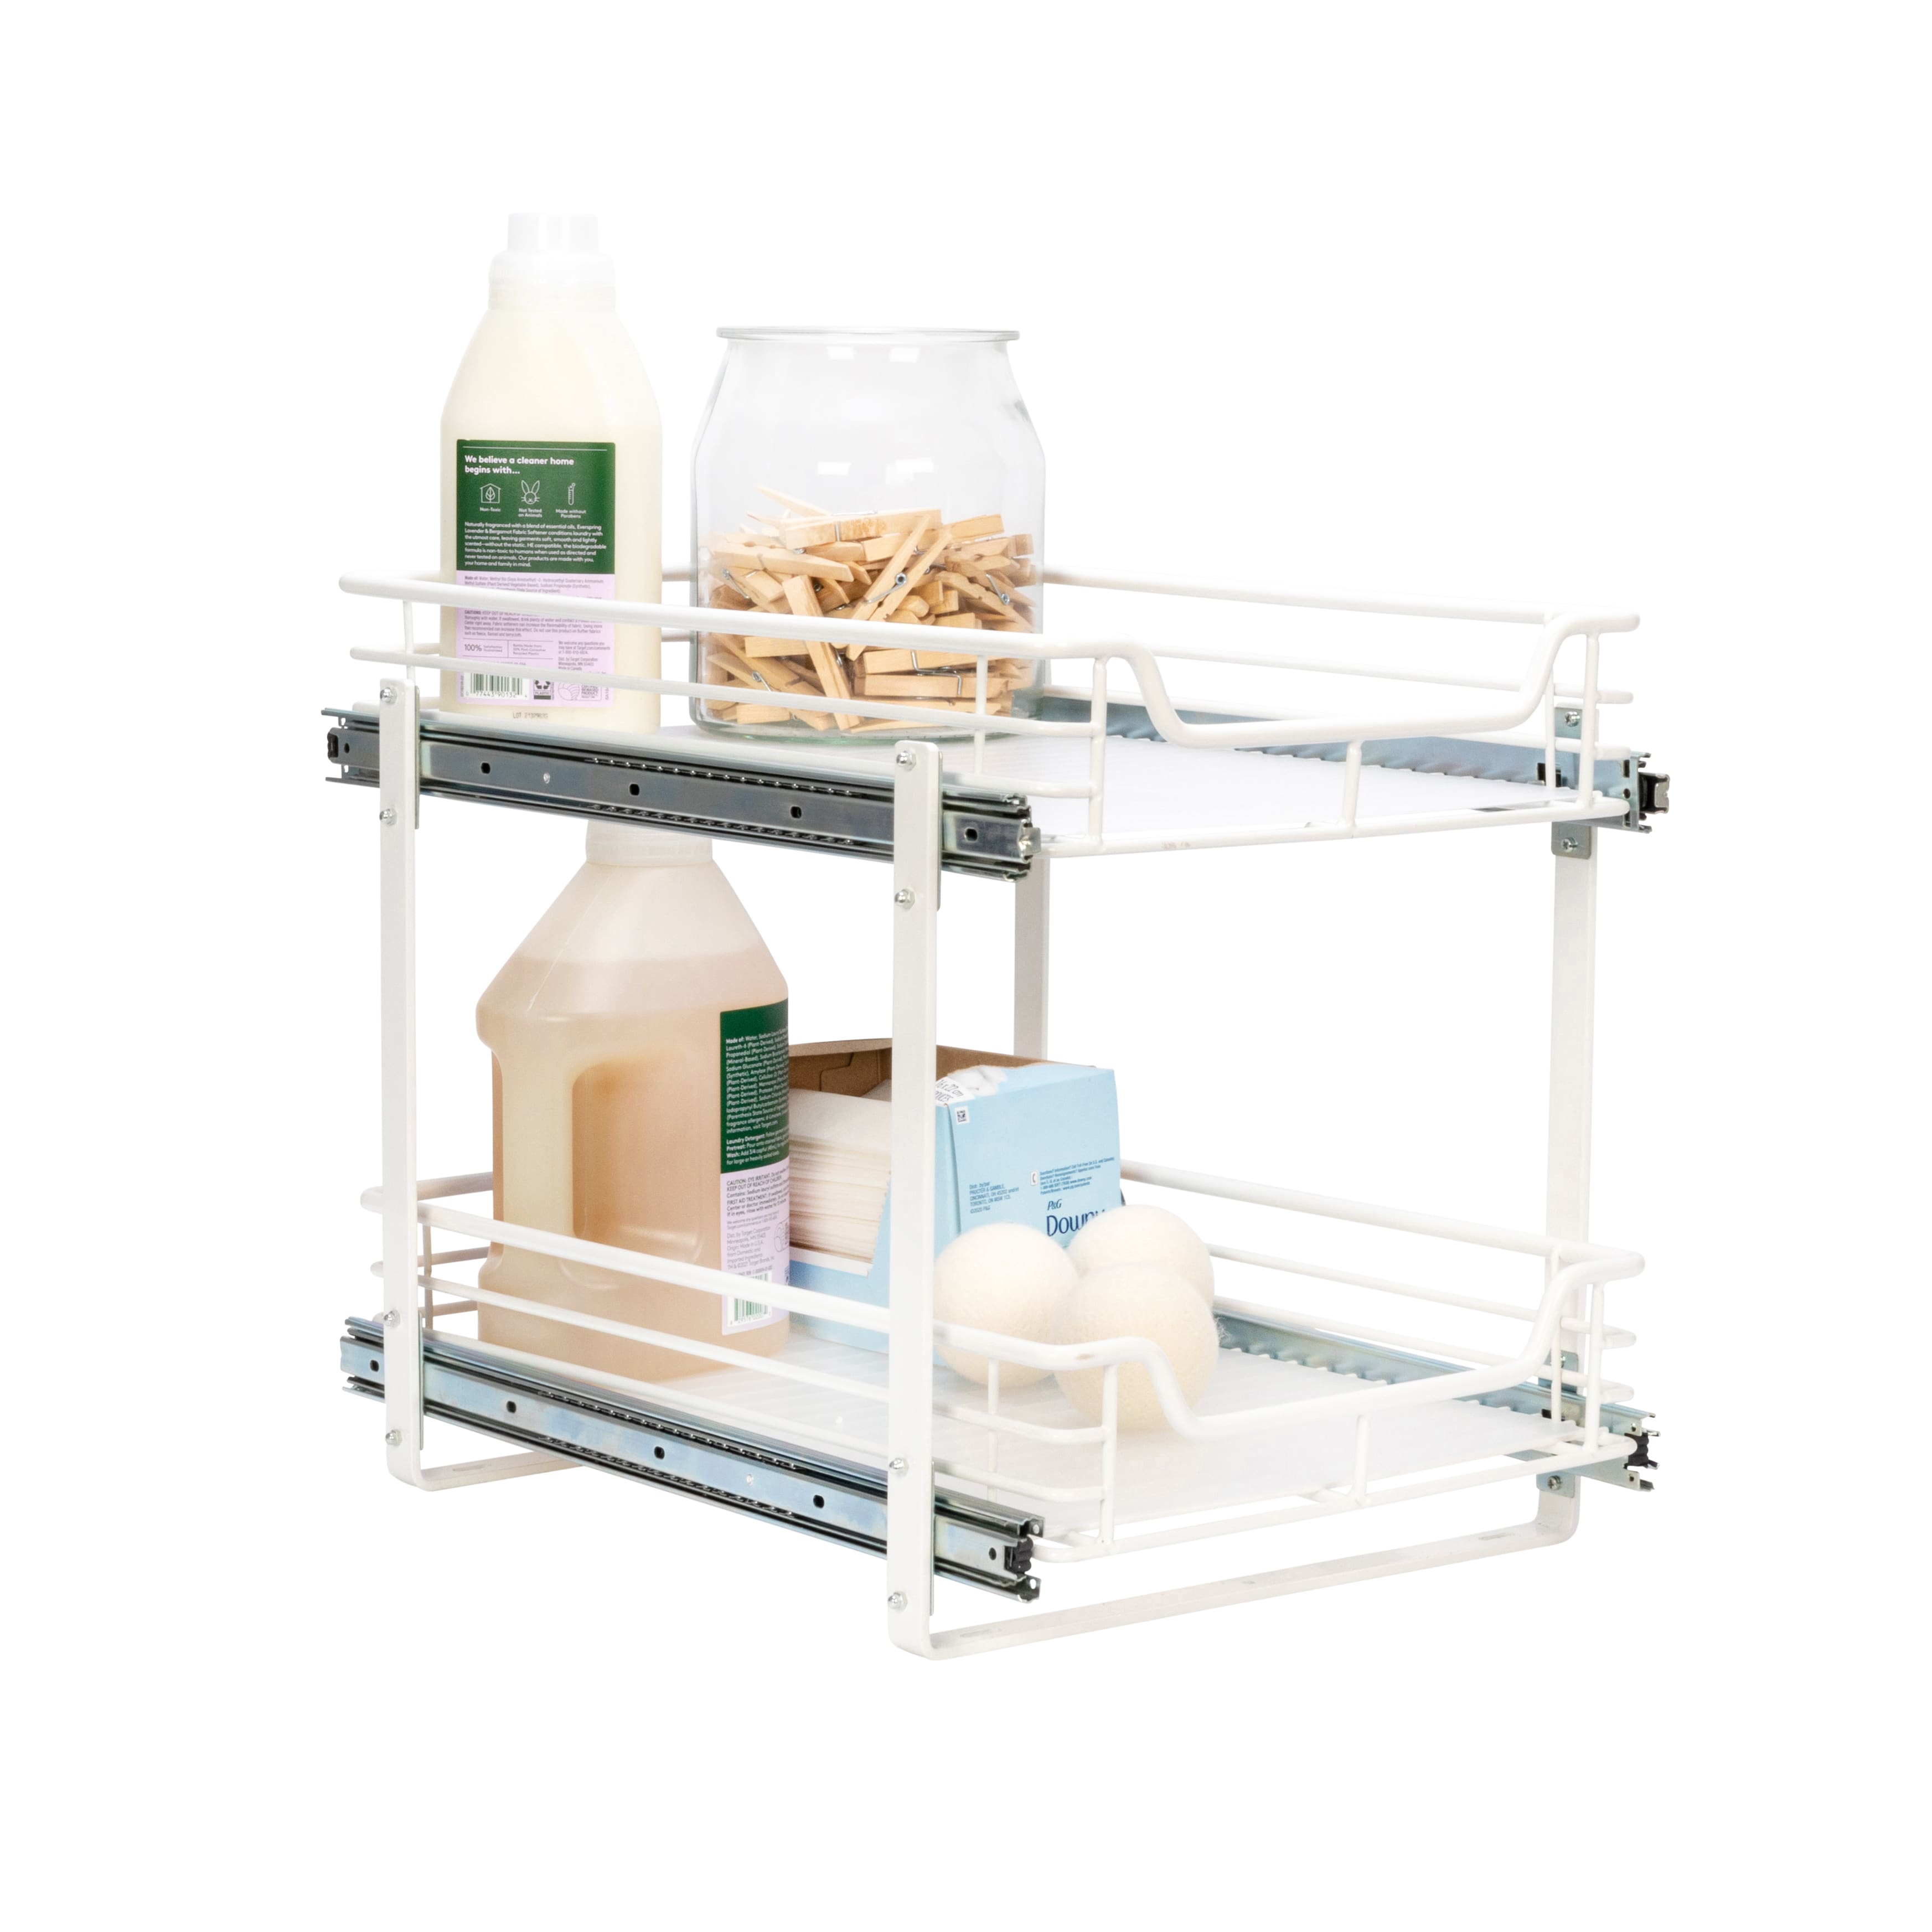 Household Essentials Glidez 11.5 2-Tier Dual Sliding Cabinet